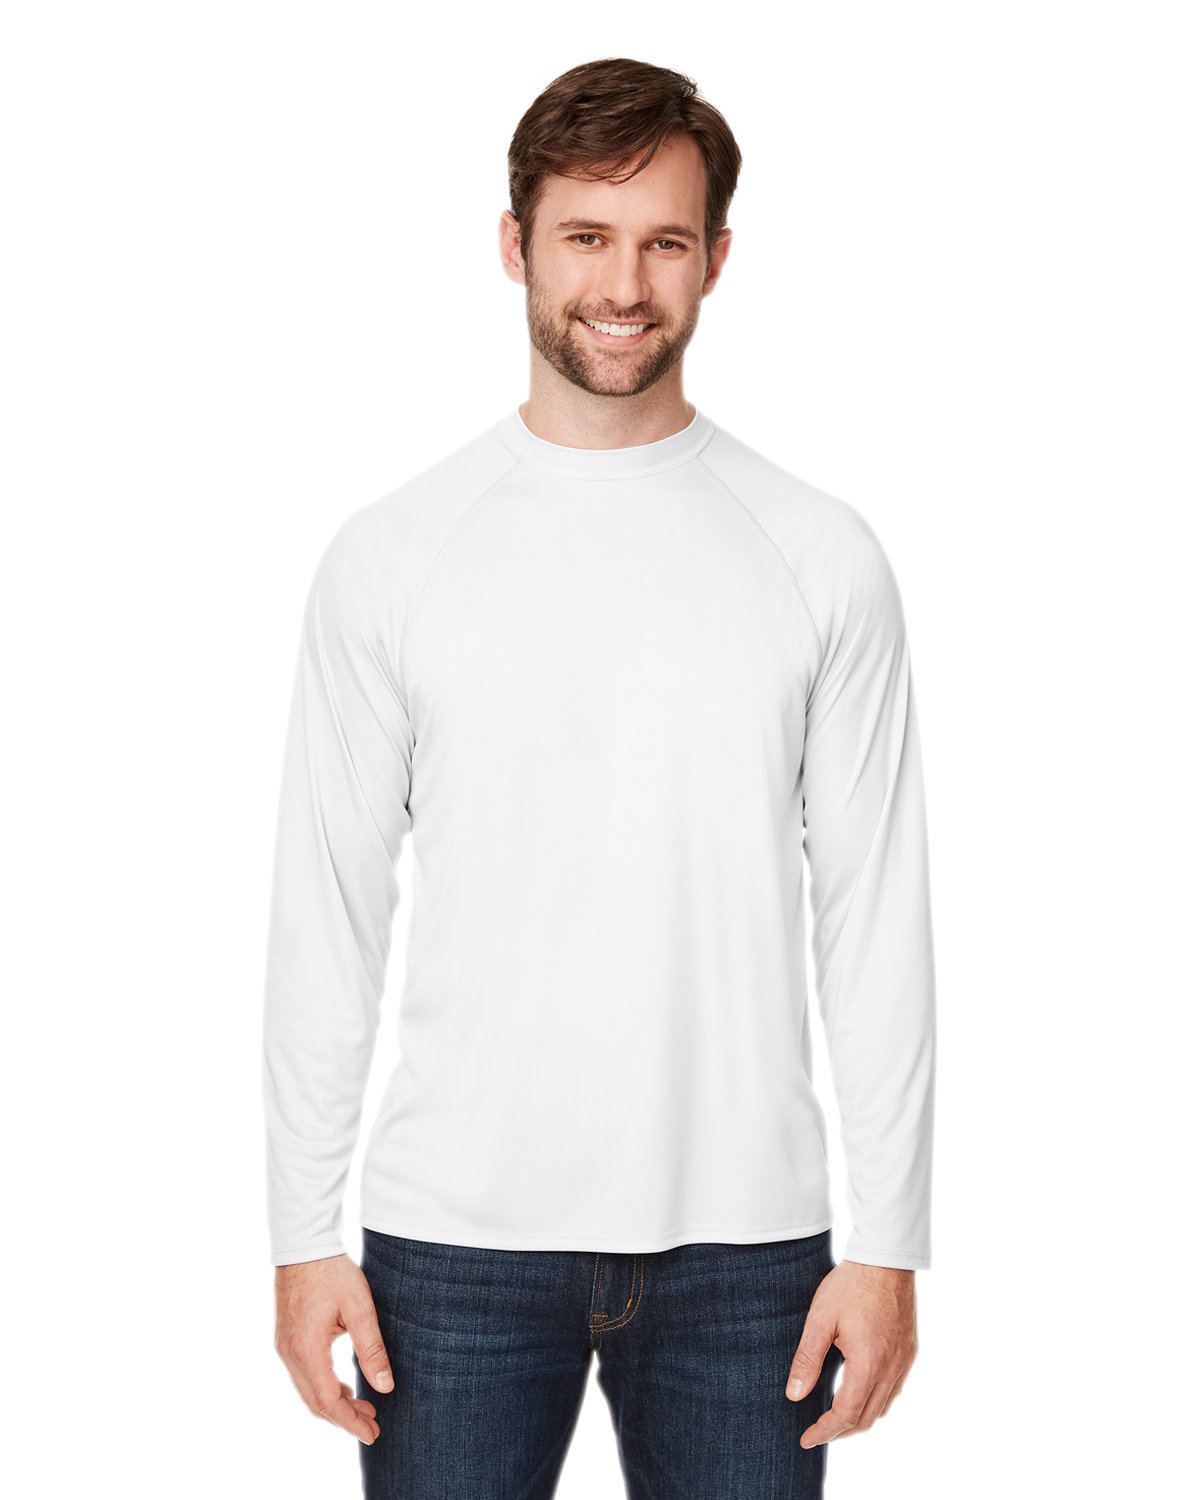 CORE365 Unisex Ultra UVP™ Raglan T-Shirt white 